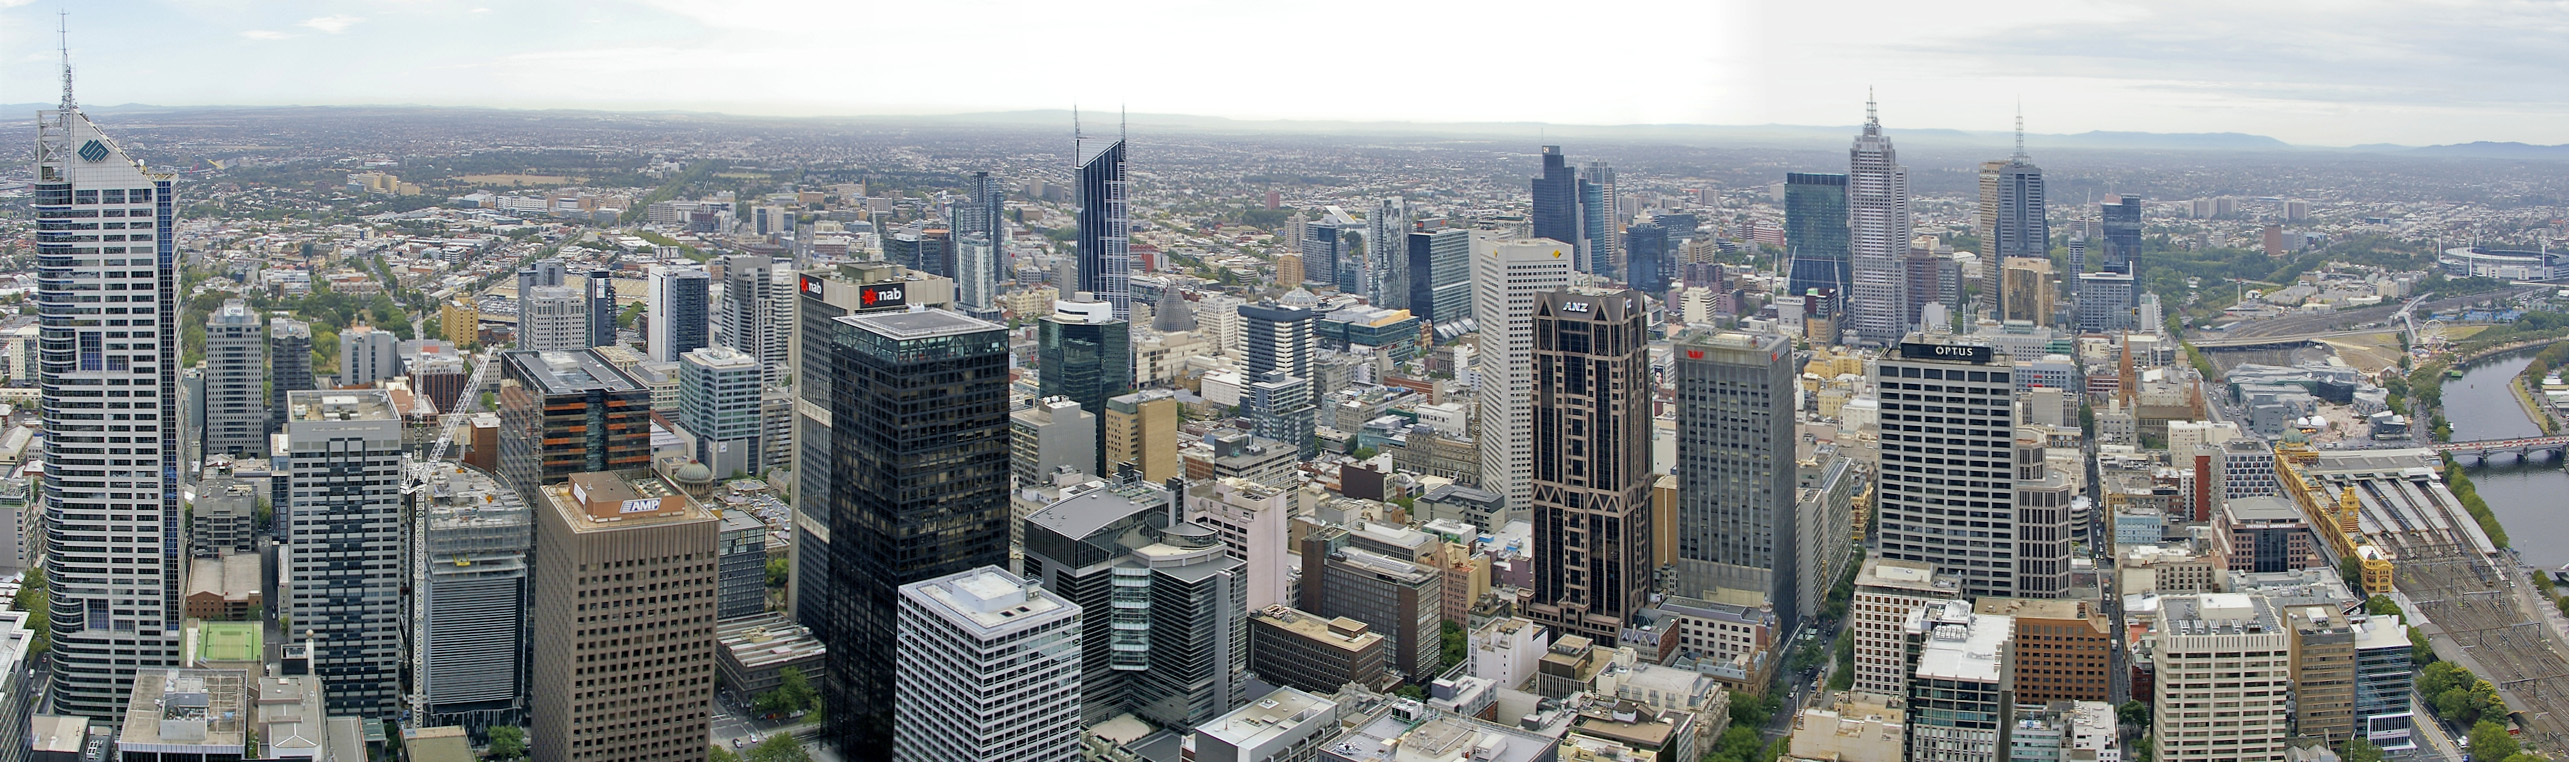 File:Melbourne 2008 Panorama.jpg - Wikimedia Commons